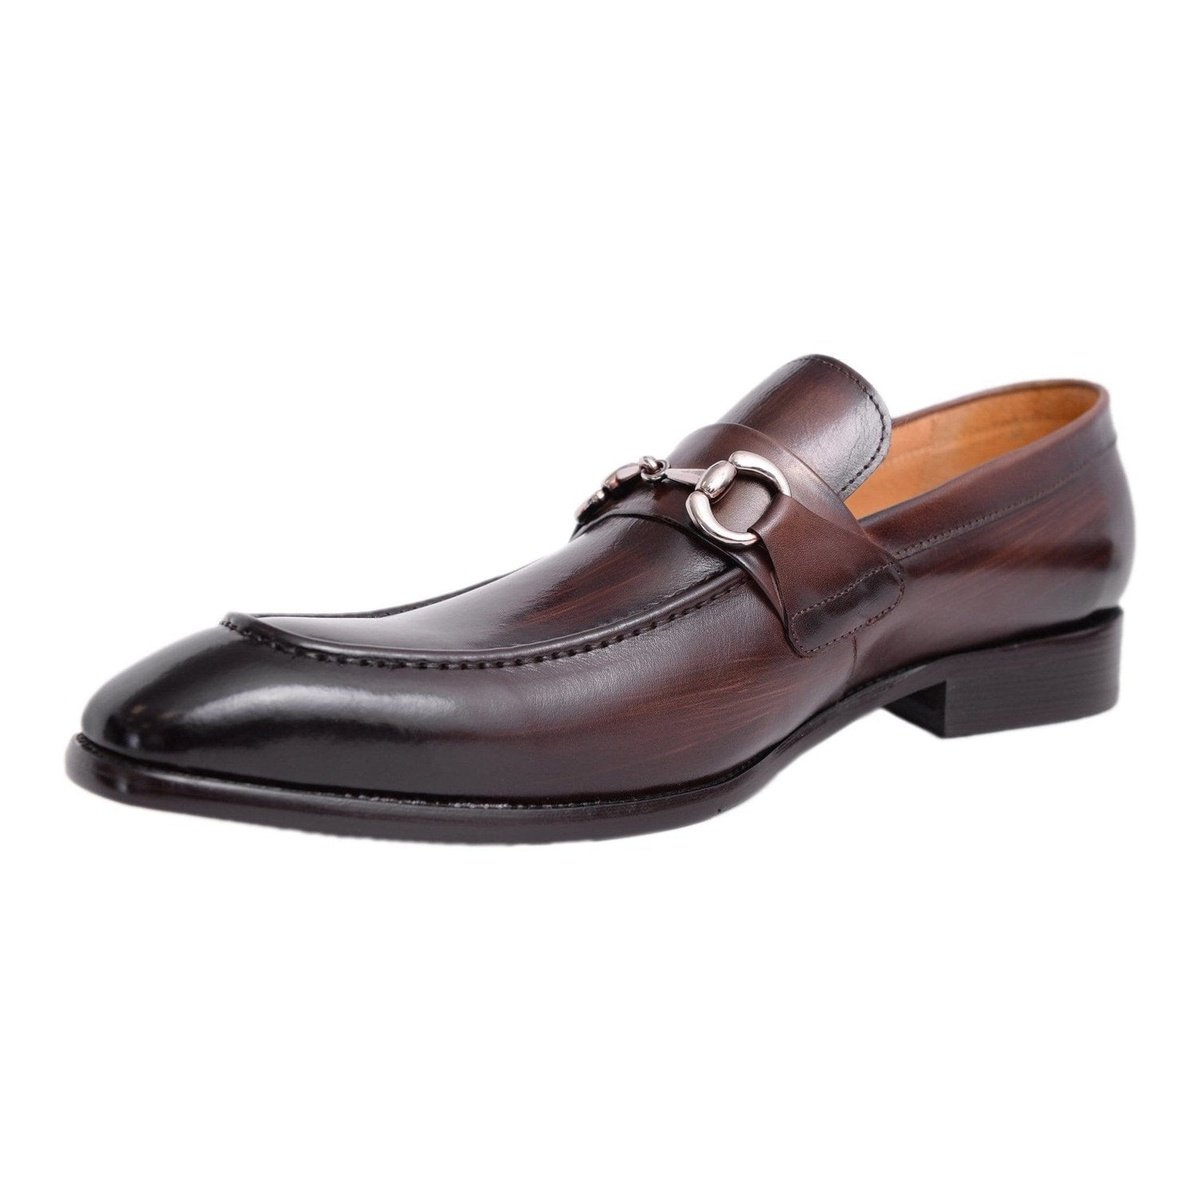 Carrucci Burgundy Burnished Calfskin Rubber Soled Wholecut Oxford Shoes  KS518-01 - $149.90 :: Upscale Menswear - UpscaleMenswear.com